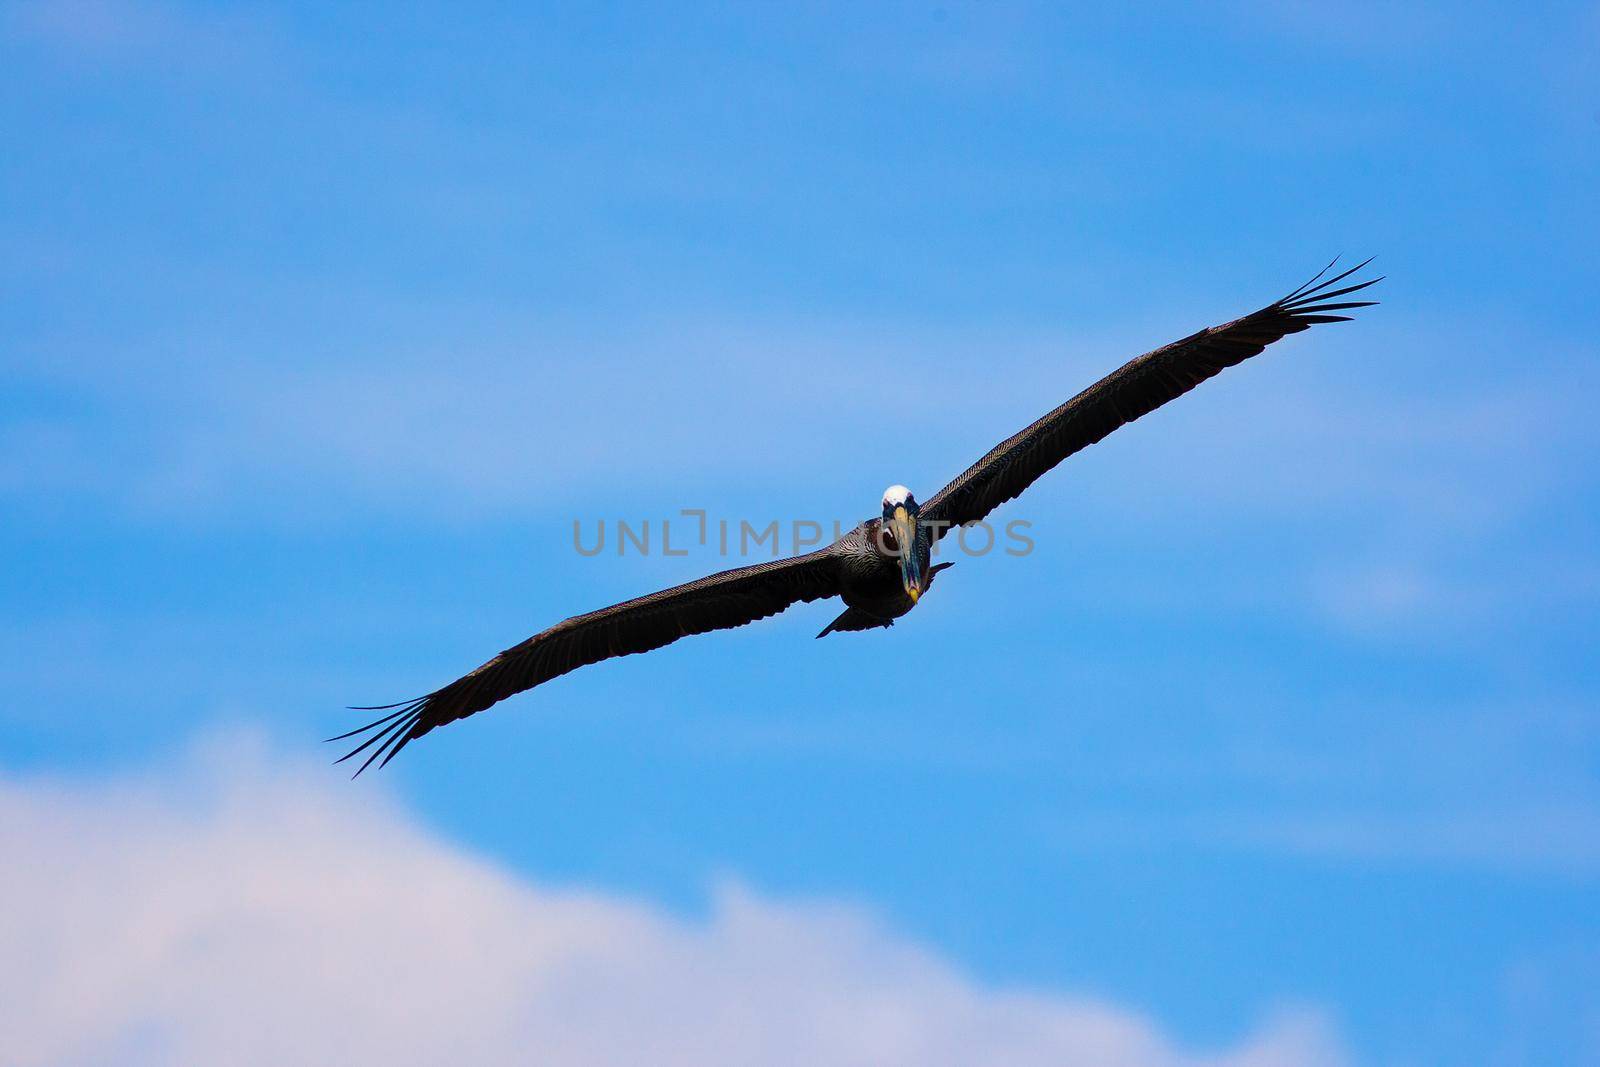 a bird in flight against a blue sky